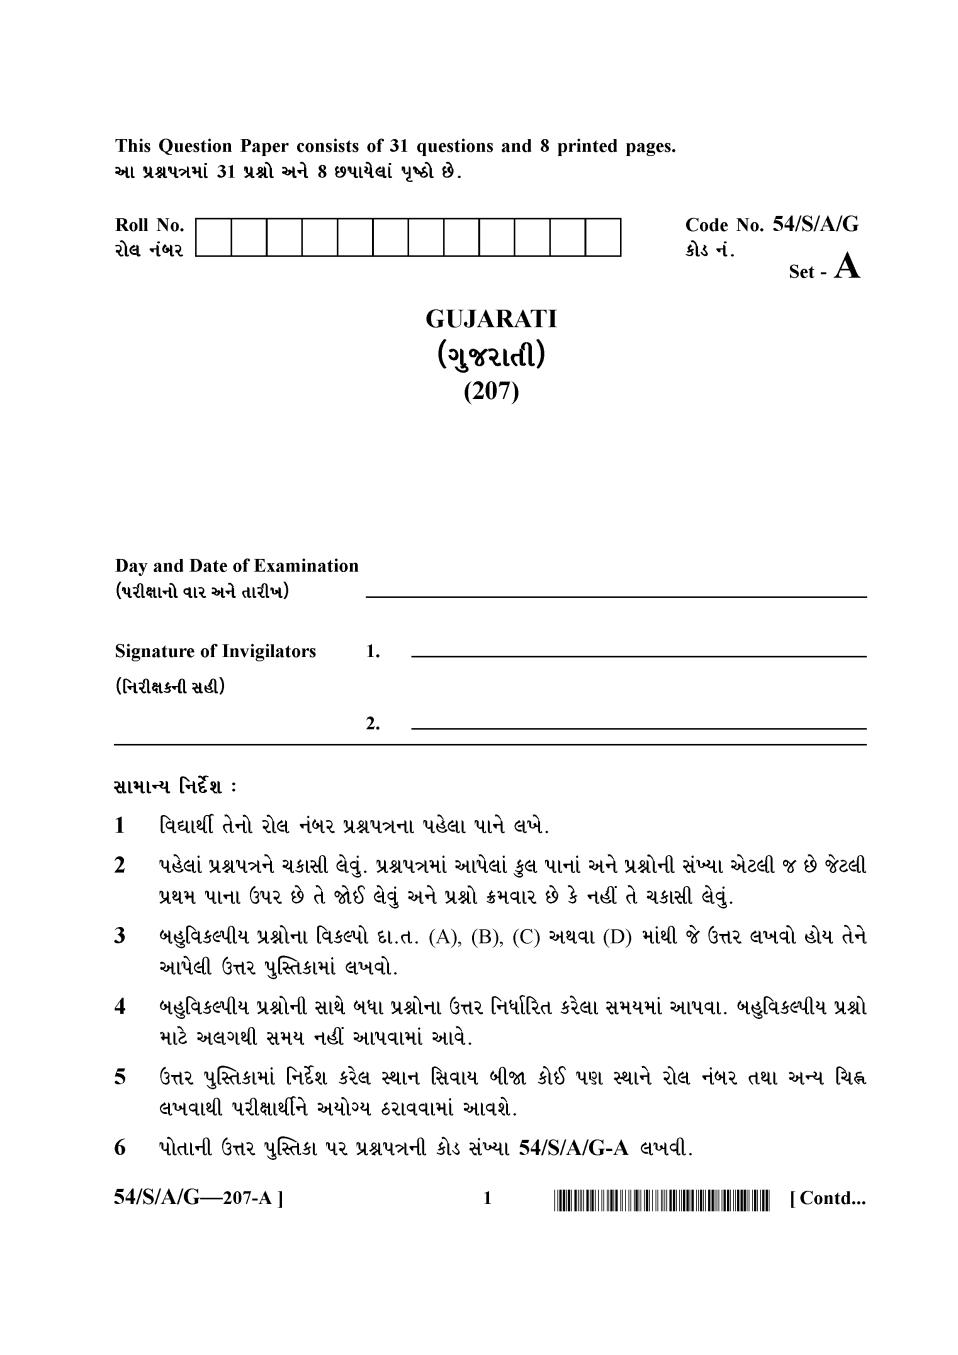 NIOS Class 10 Question Paper Apr 2017 - Gujarati - Page 1